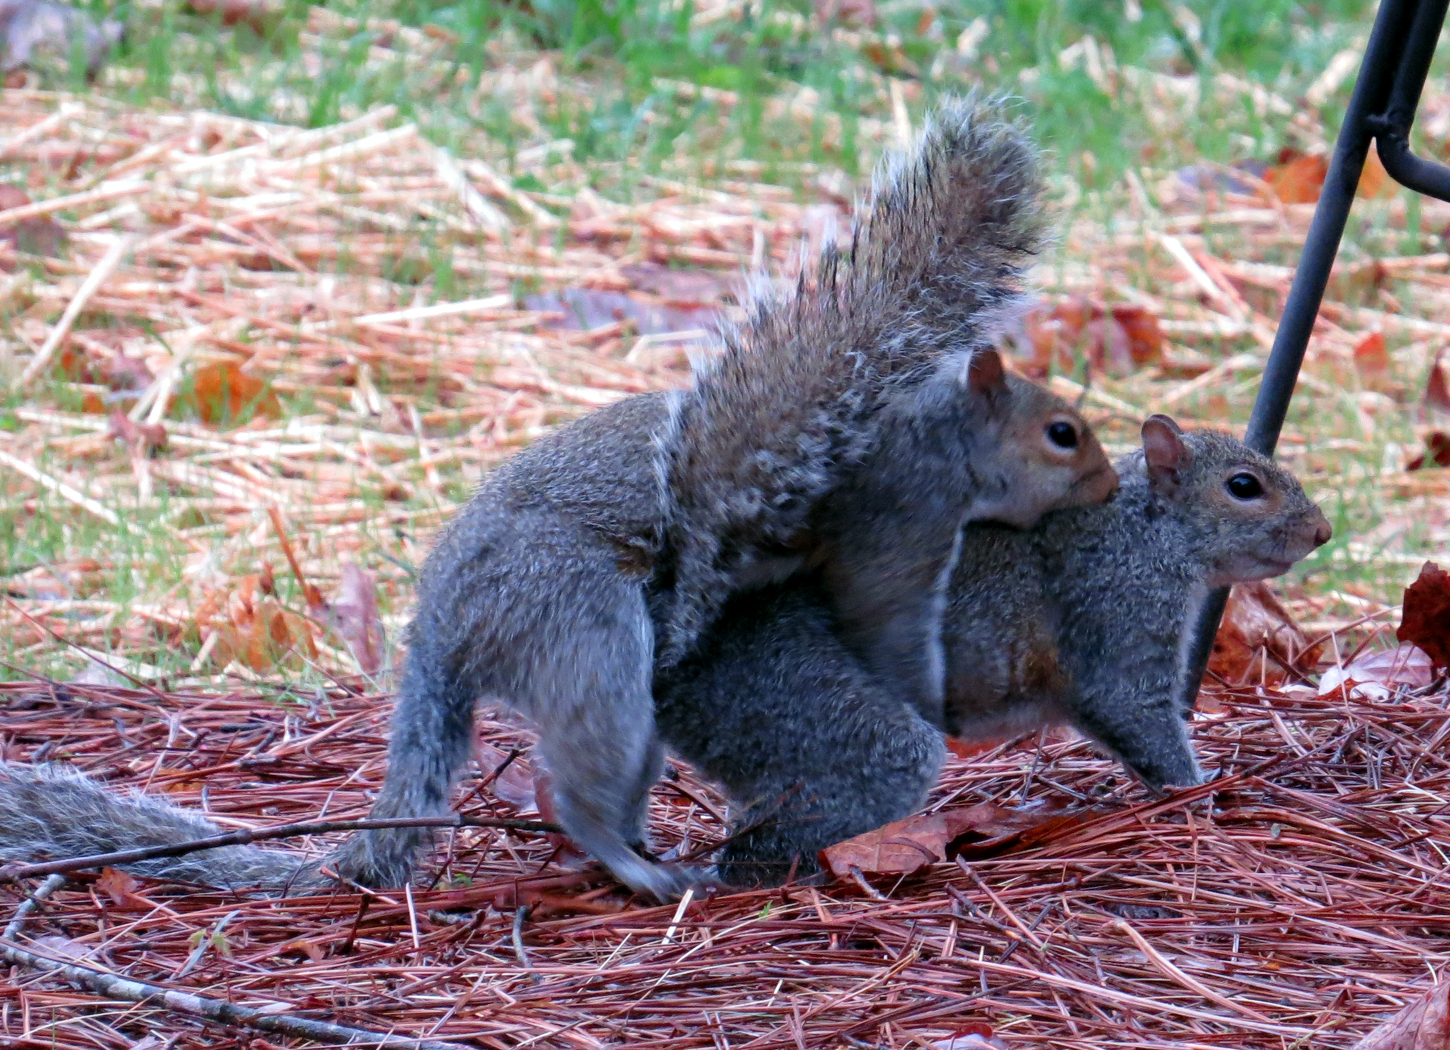 When do squirrels mate?